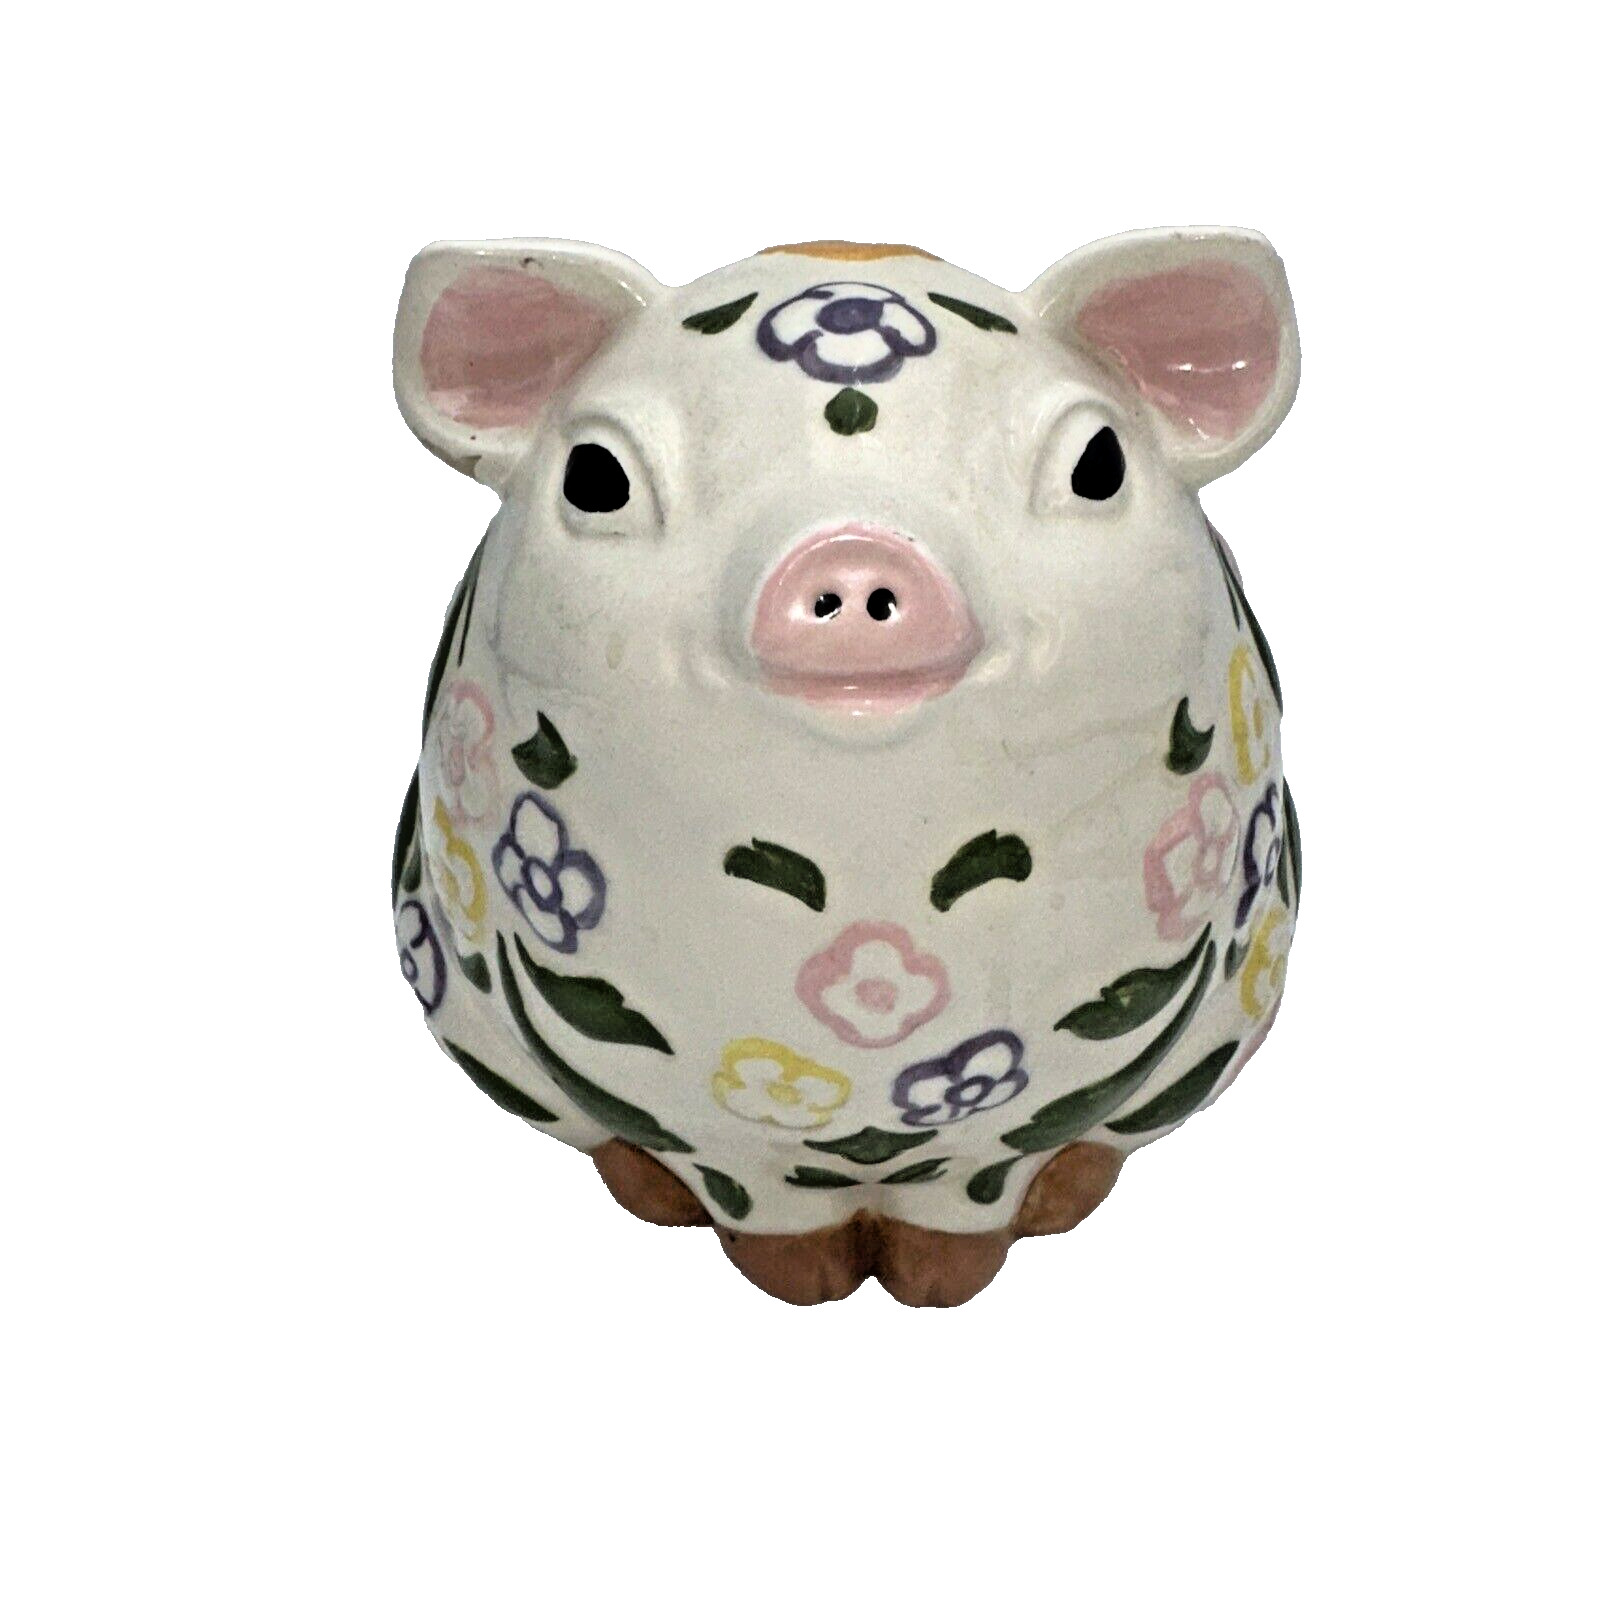 VTG 1965 Hand Painted Ceramic Pig Piggy Bank With Stopper, signed Estate Item